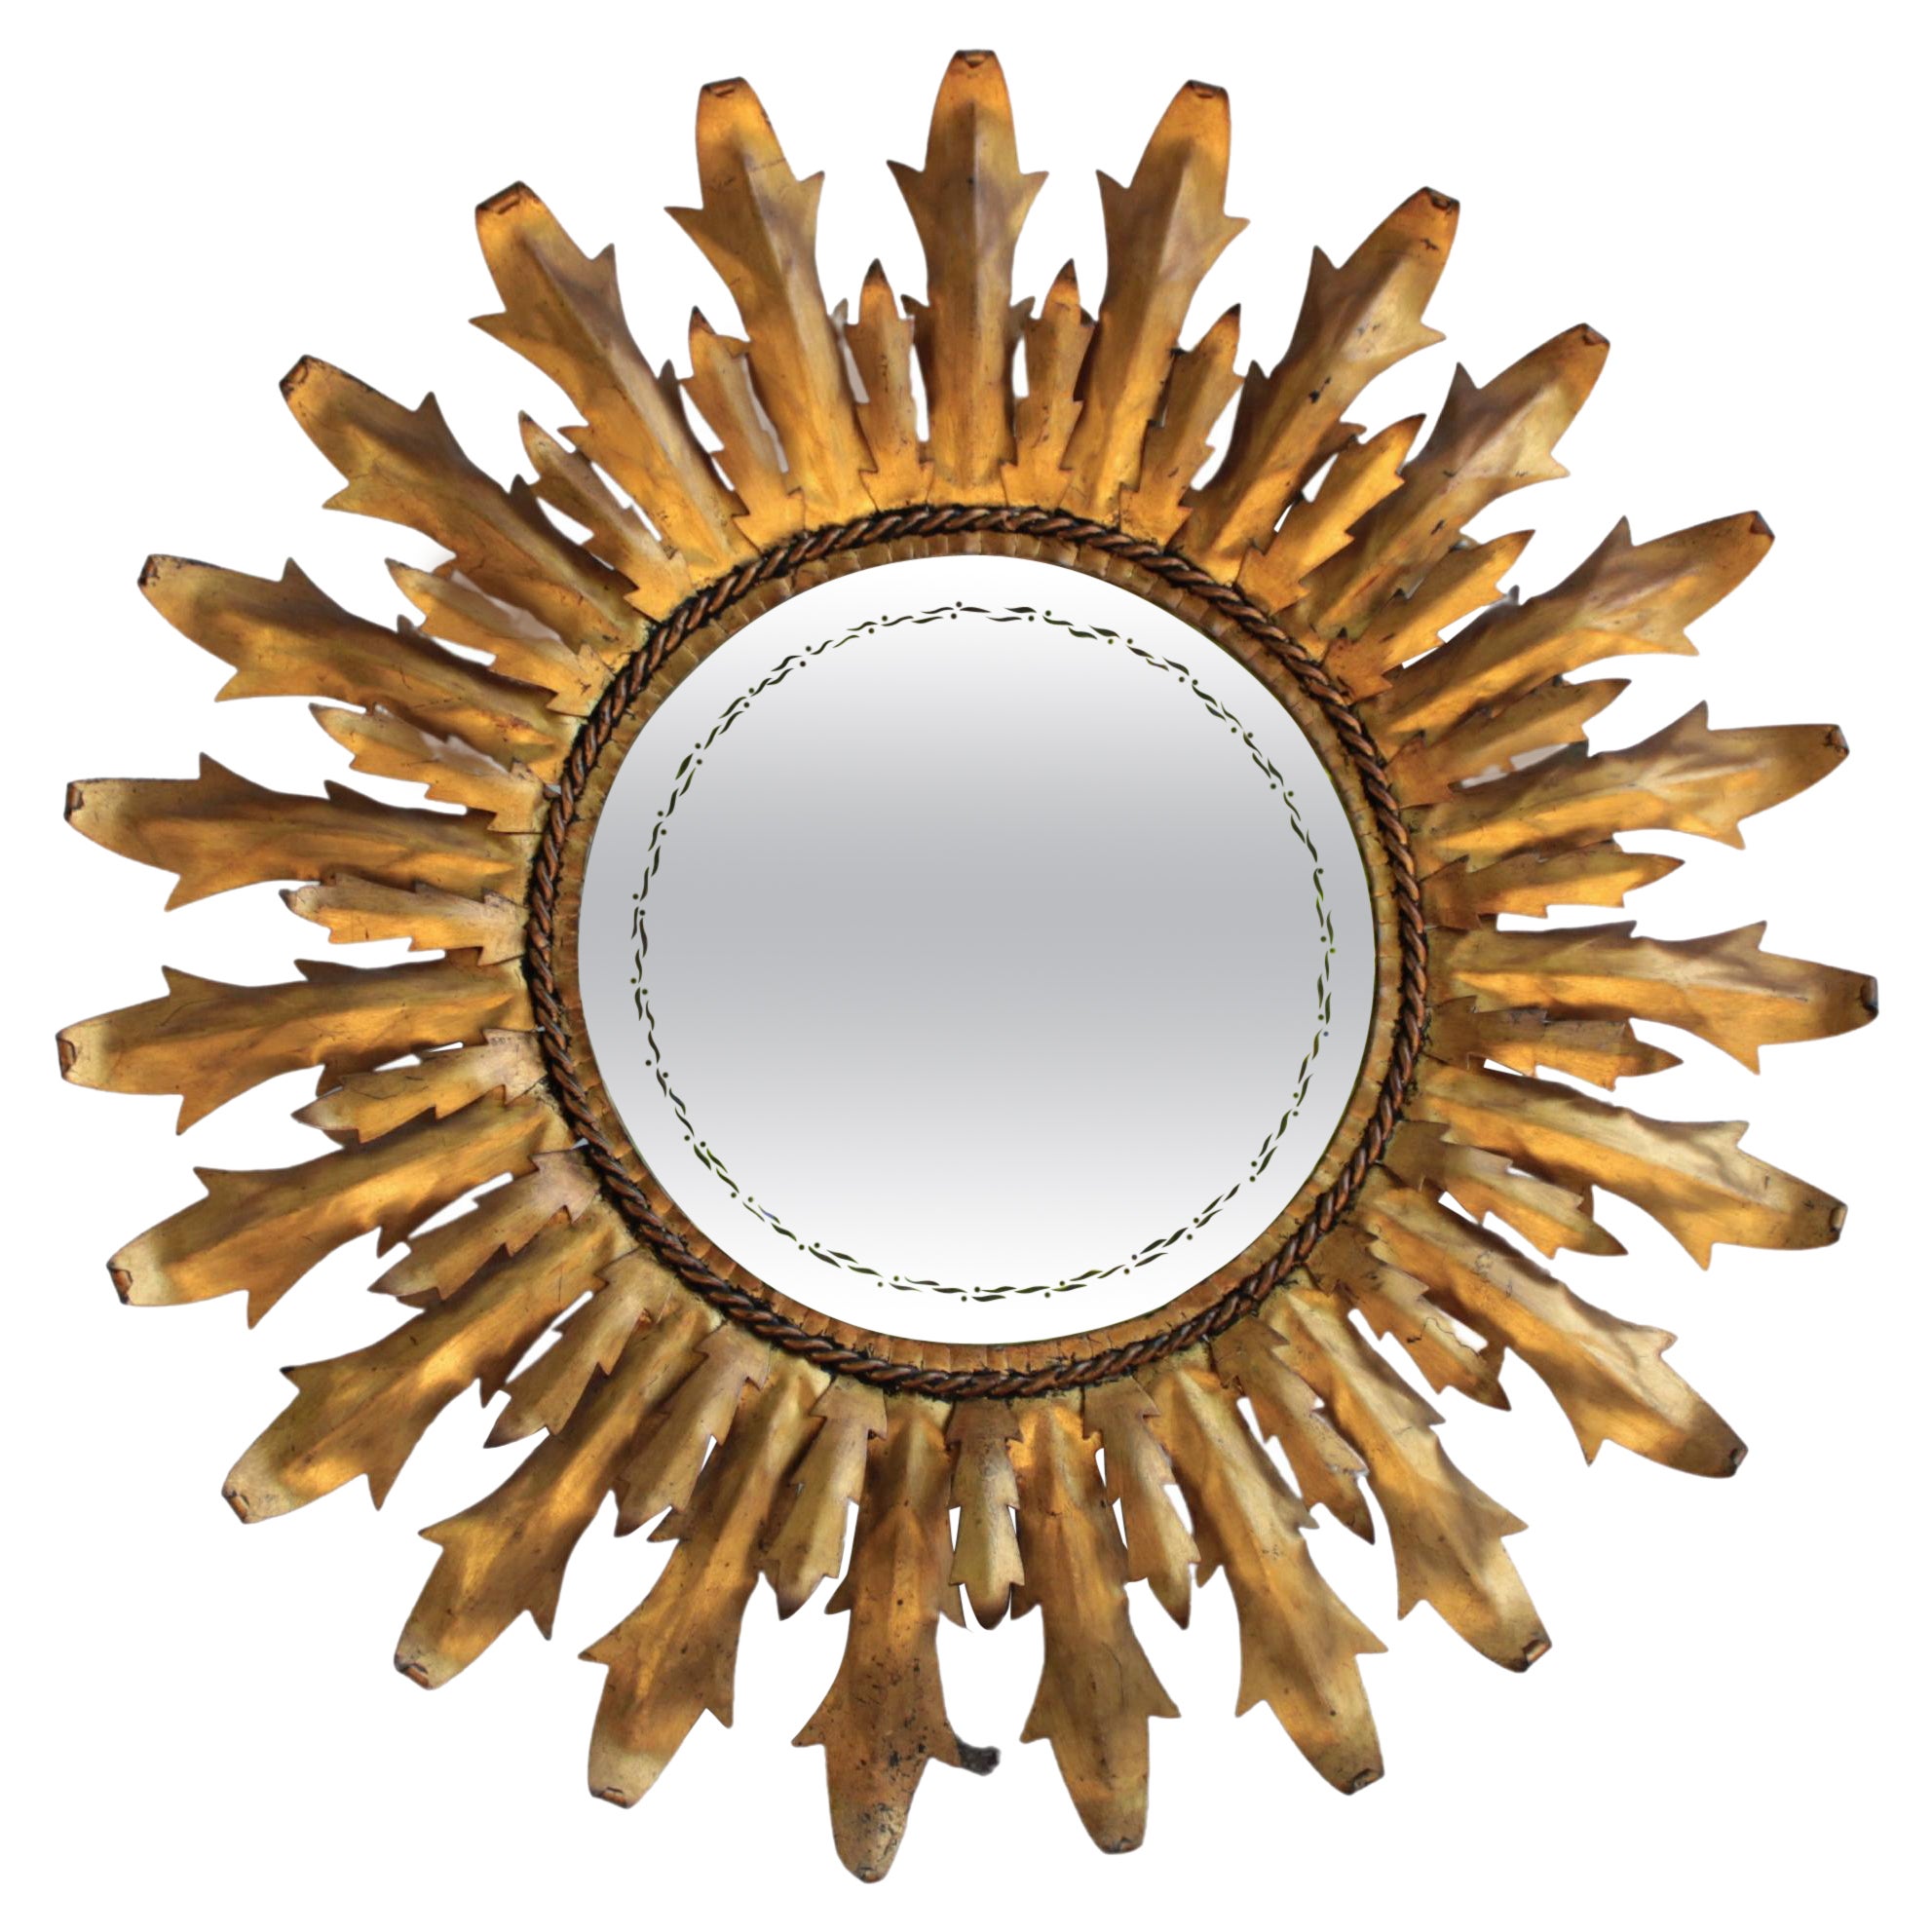 Circular Mirror "Sun" in Golden Metal, Spain Century XX, C. 1980